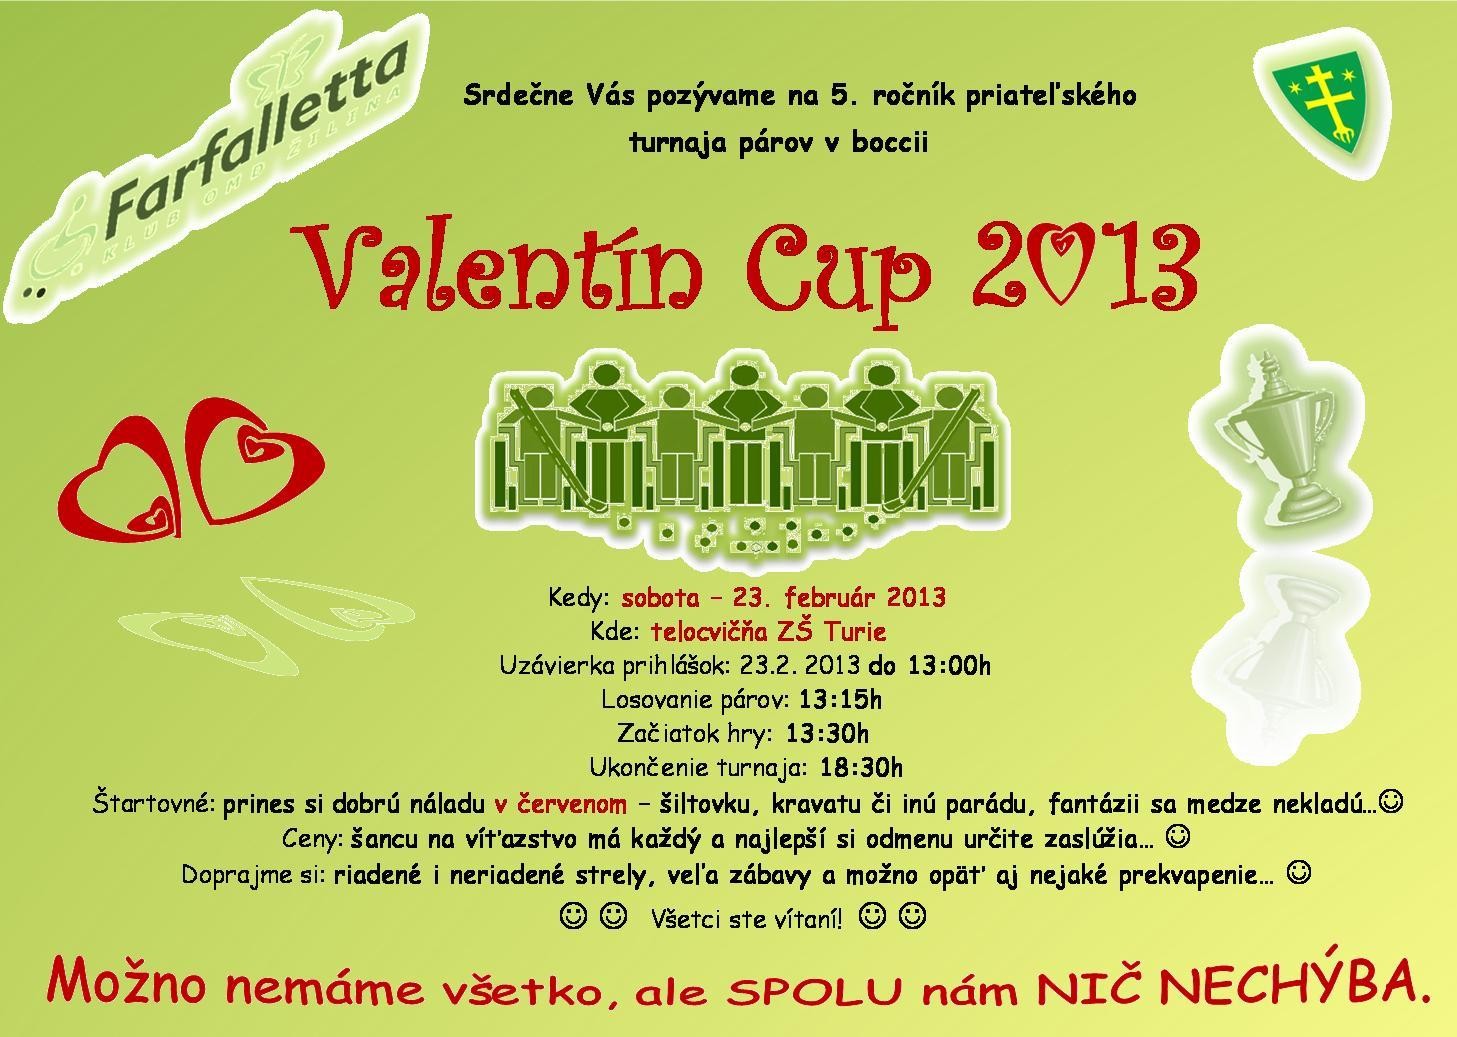 pozvanka---velentin-cup-2013a.jpg